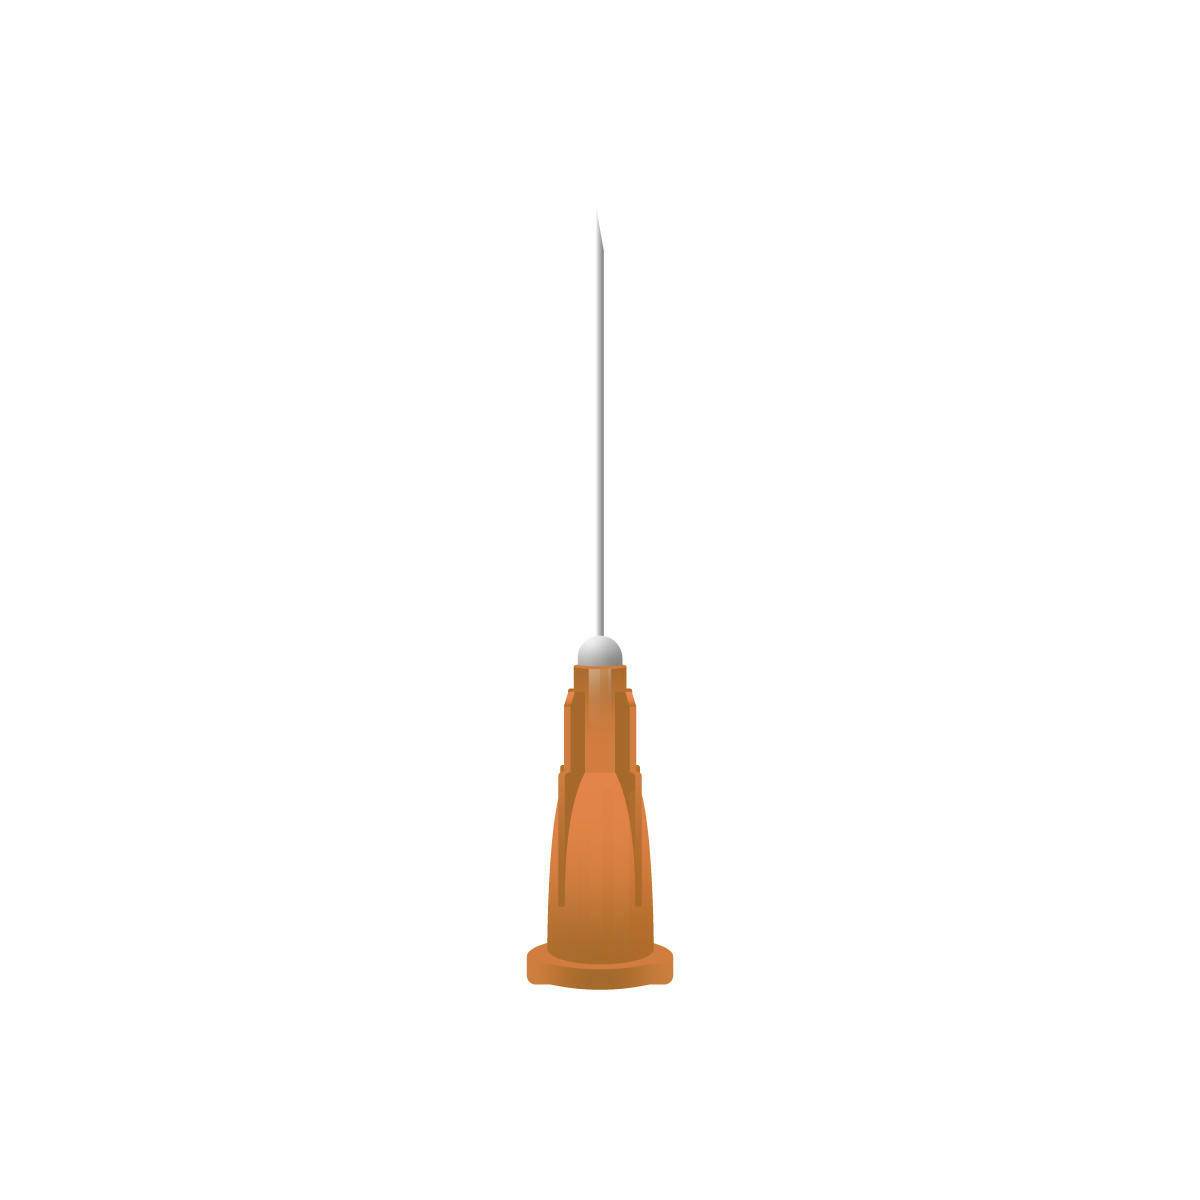 25g Orange 1 inch Unisharp Needles